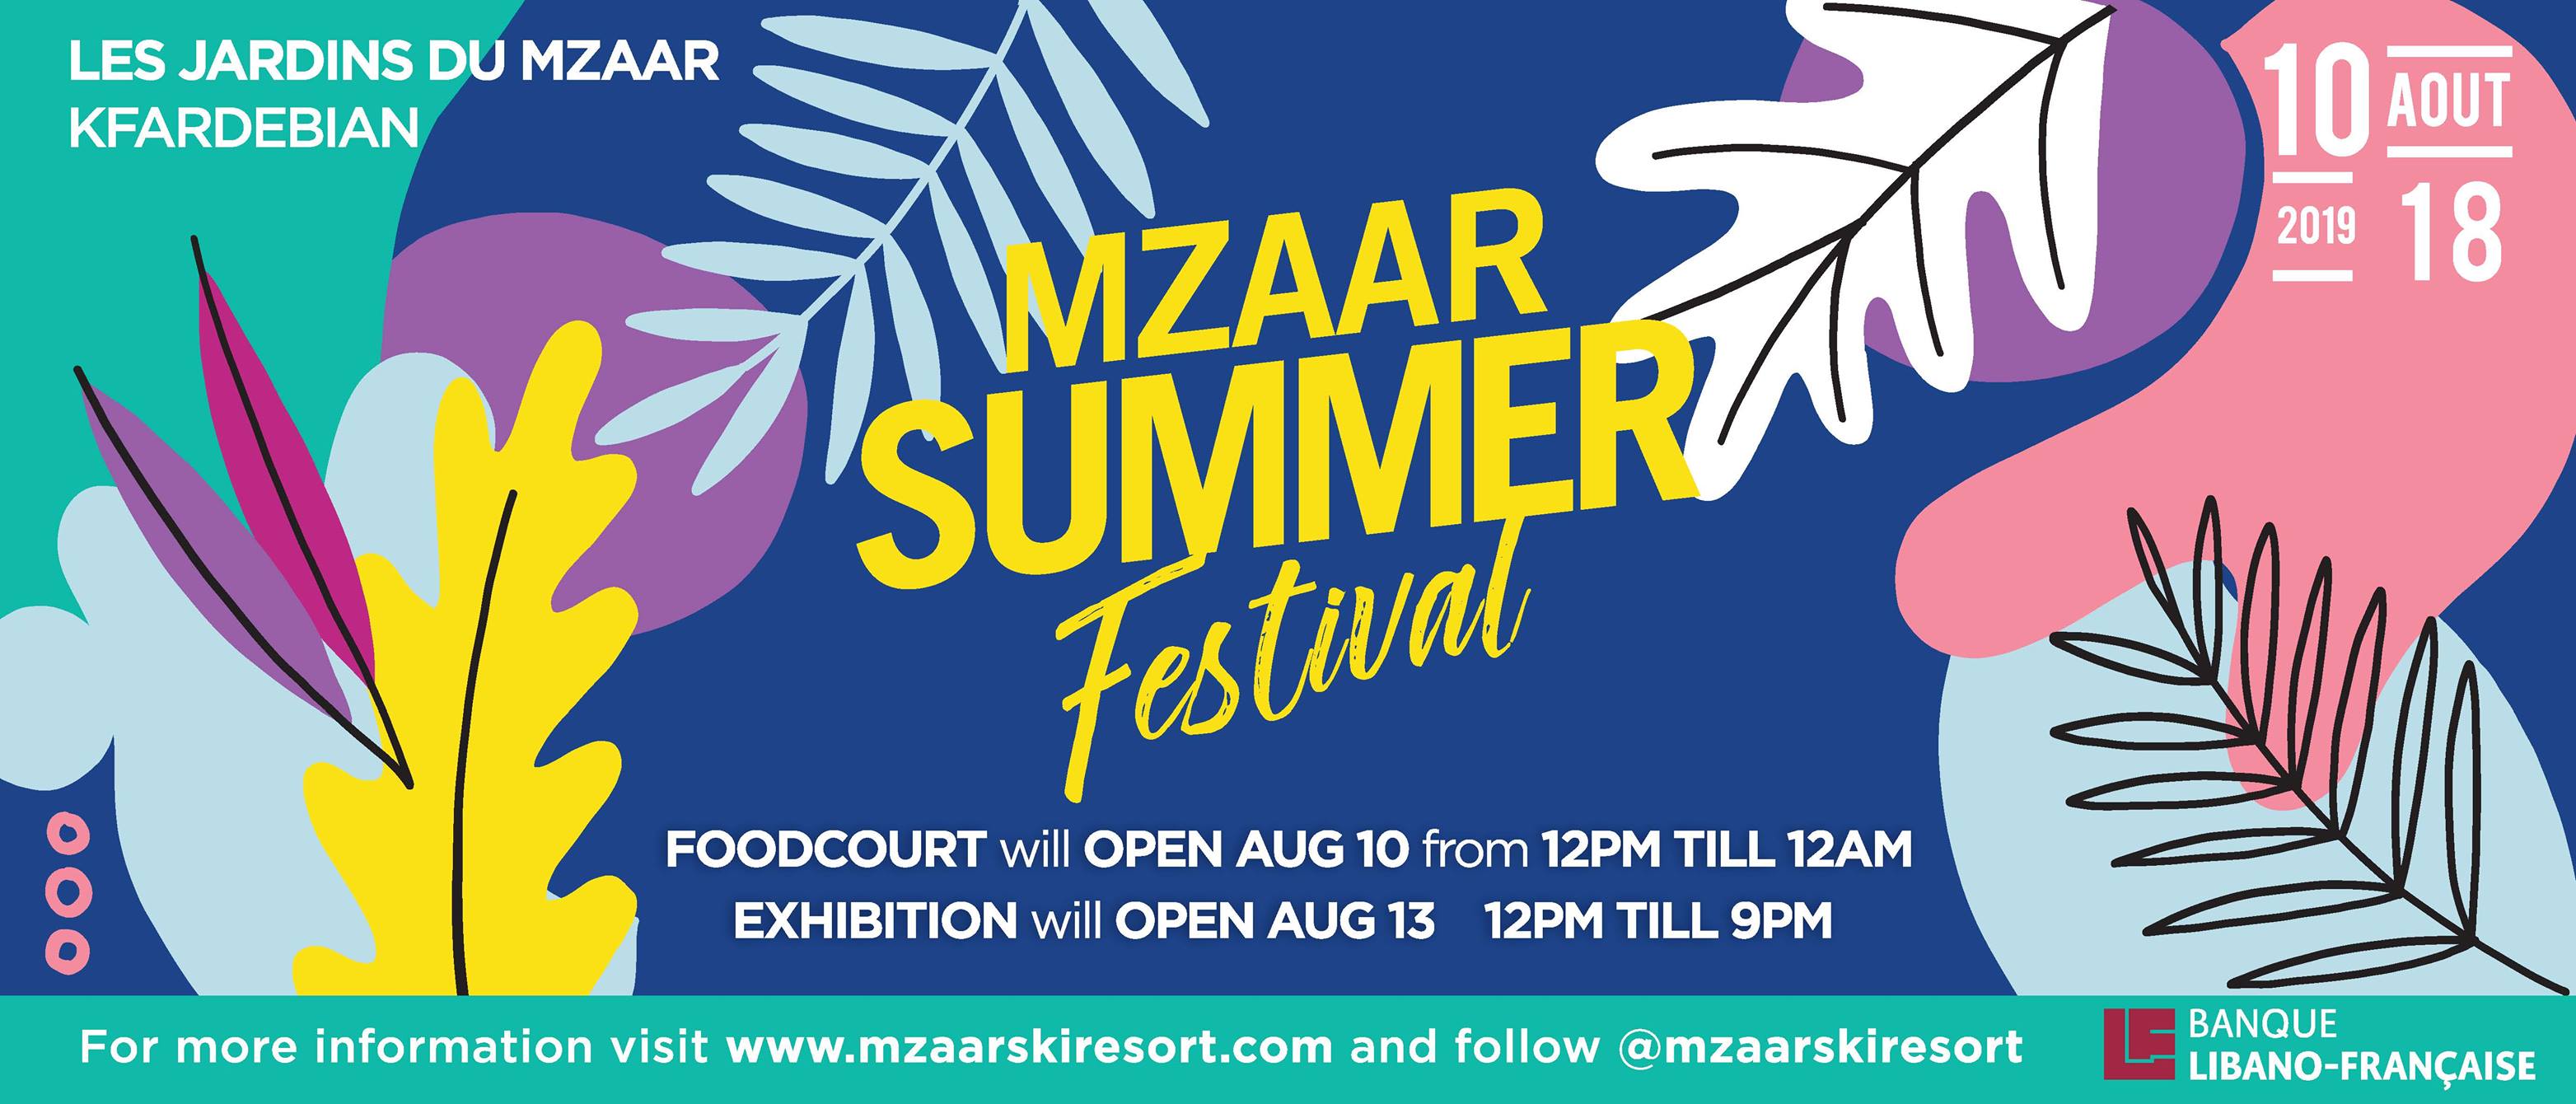 Mzaar Summer Festival